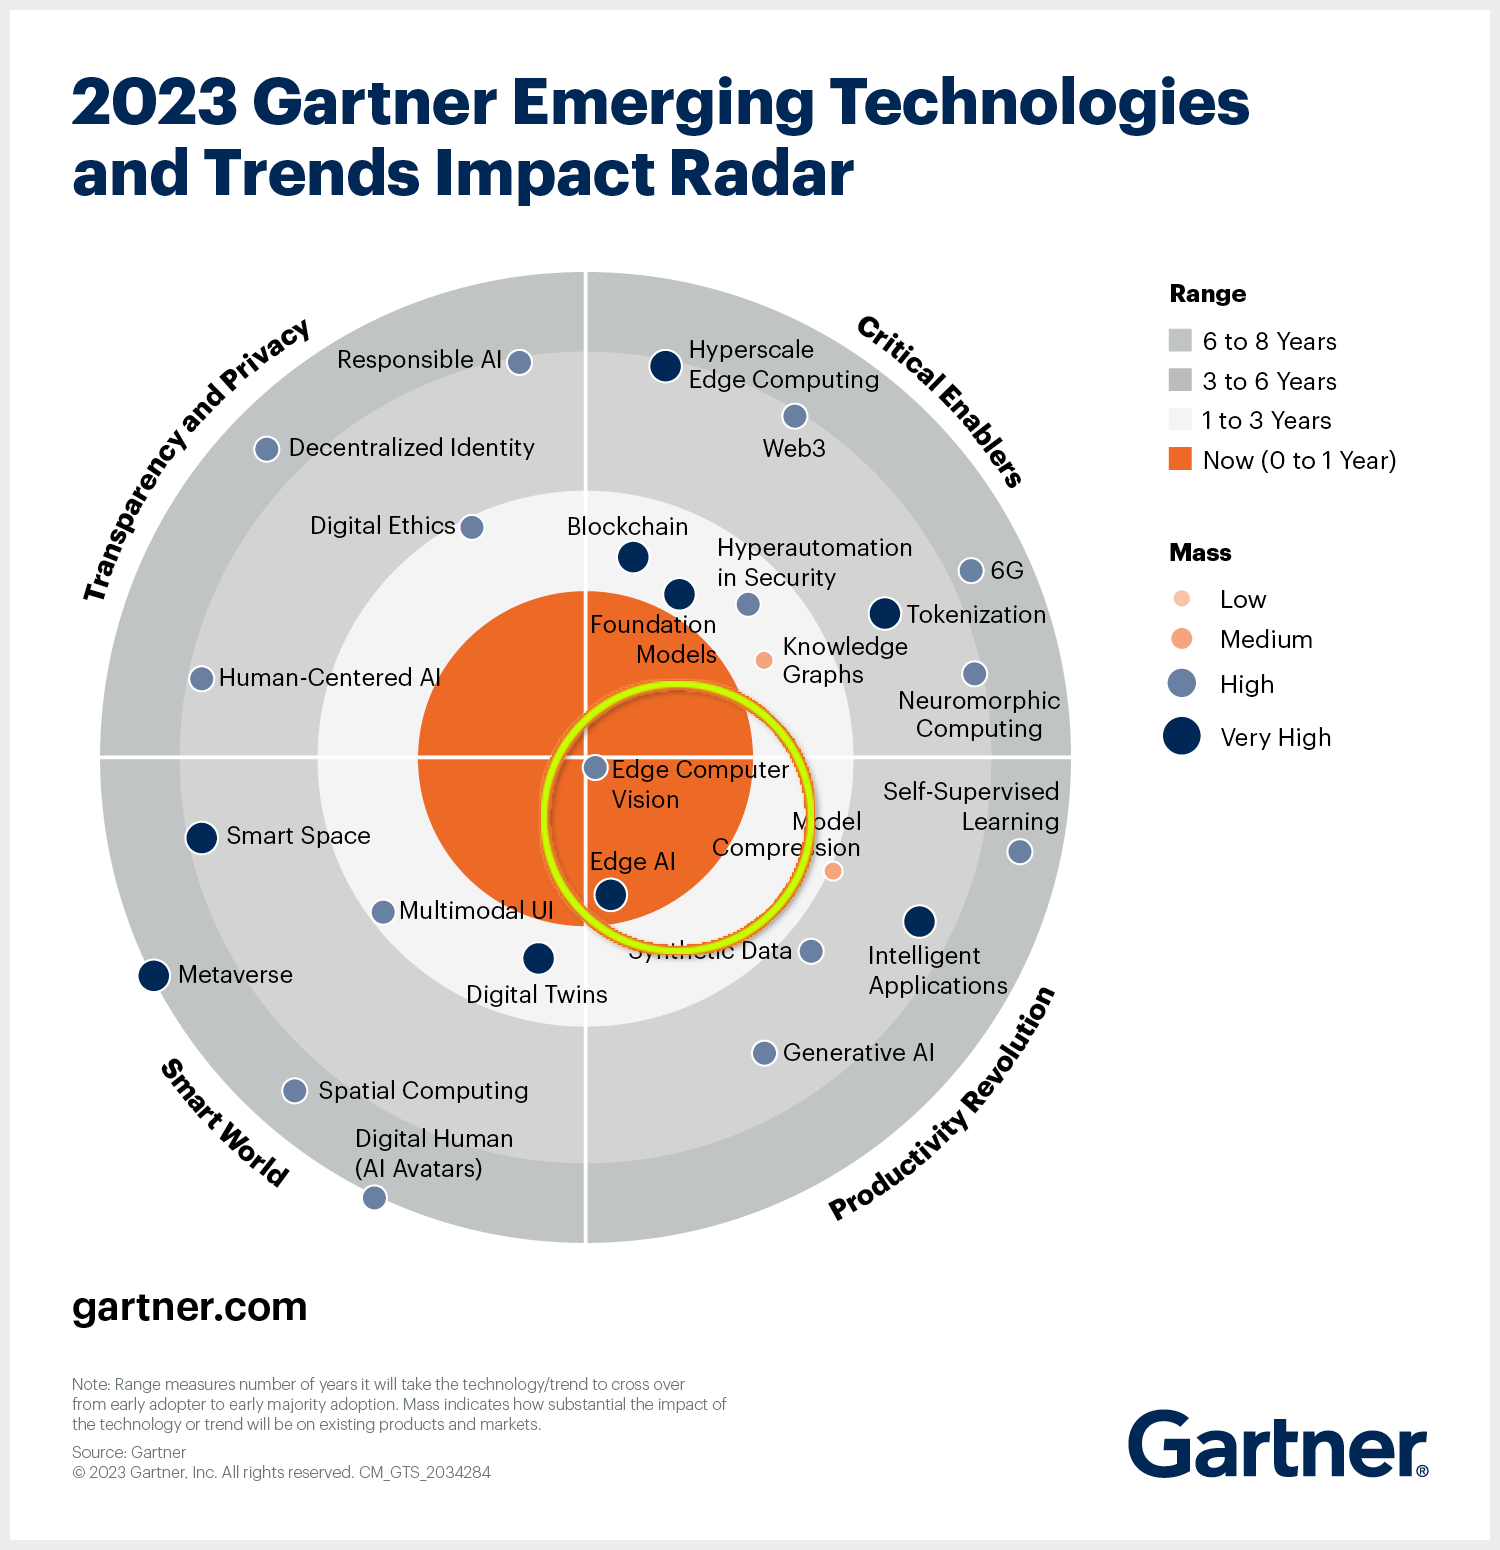 2023 Gartner Emerging Technologies and Trends Impact Radar